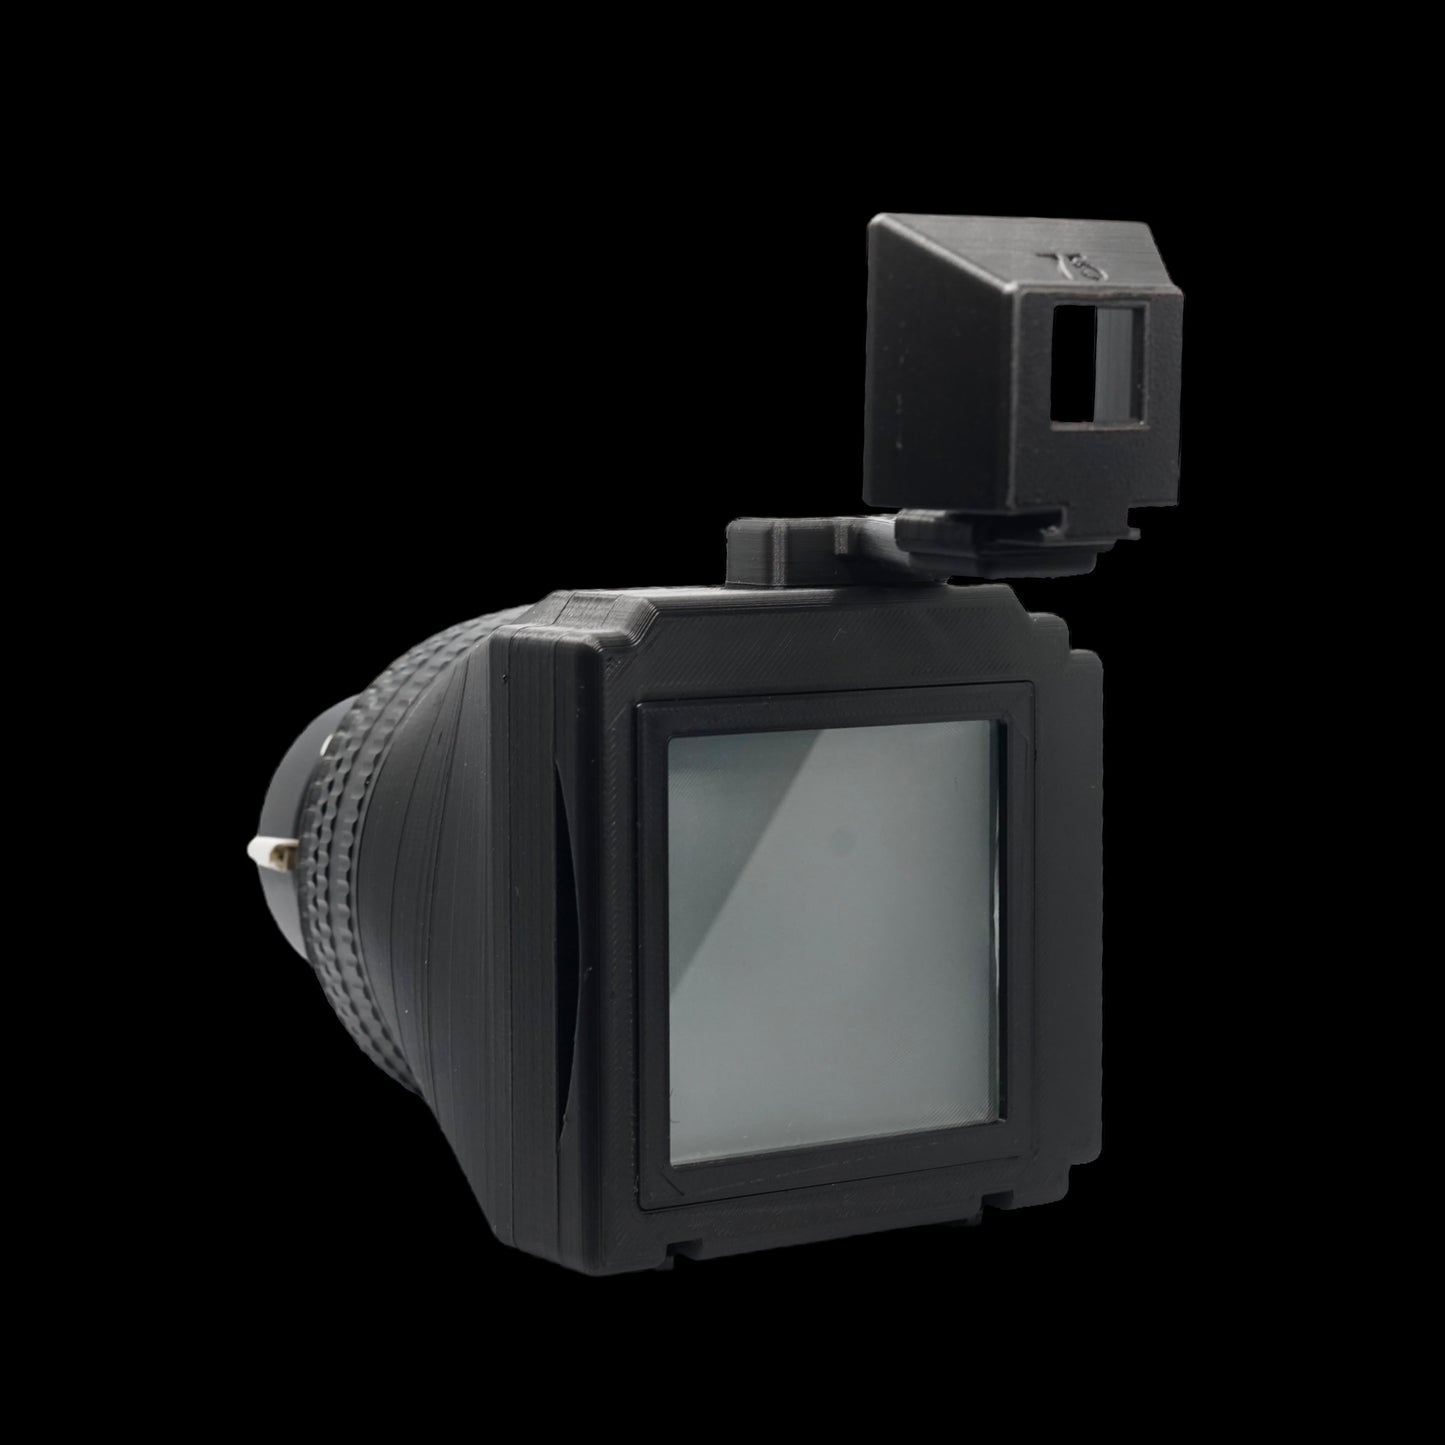 6x6 Medium Format System with Schneider 75mm F8 lens